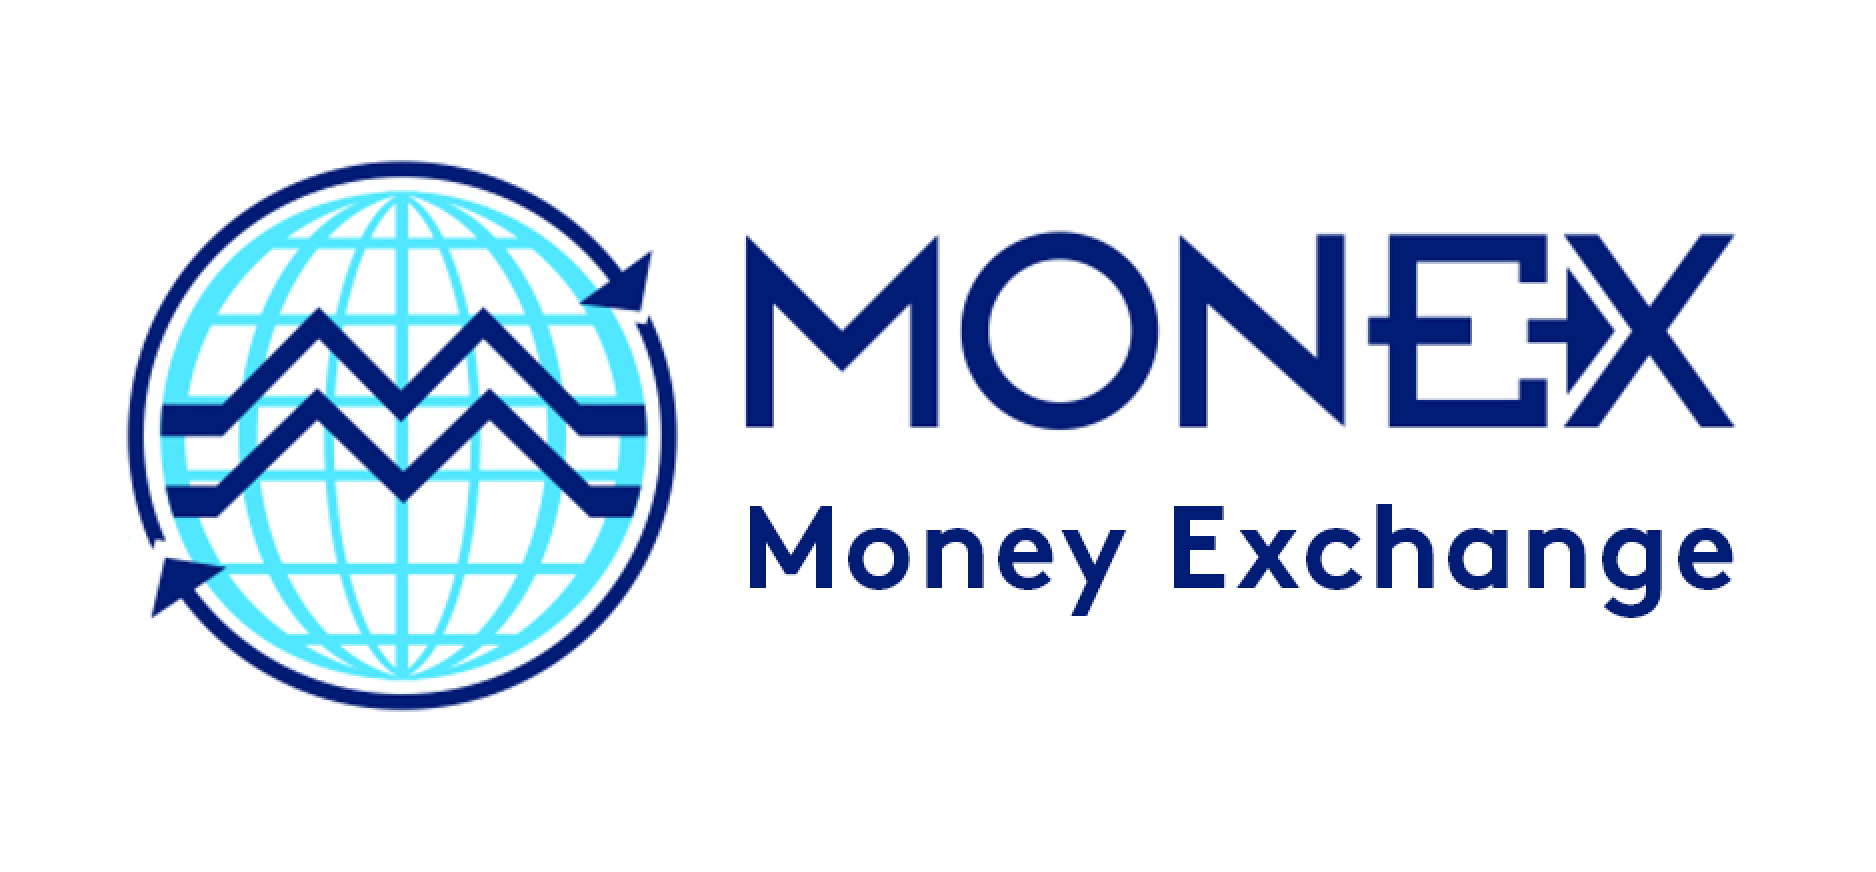 Monex Money Exchange | Independent Foreign Exchange Specialist